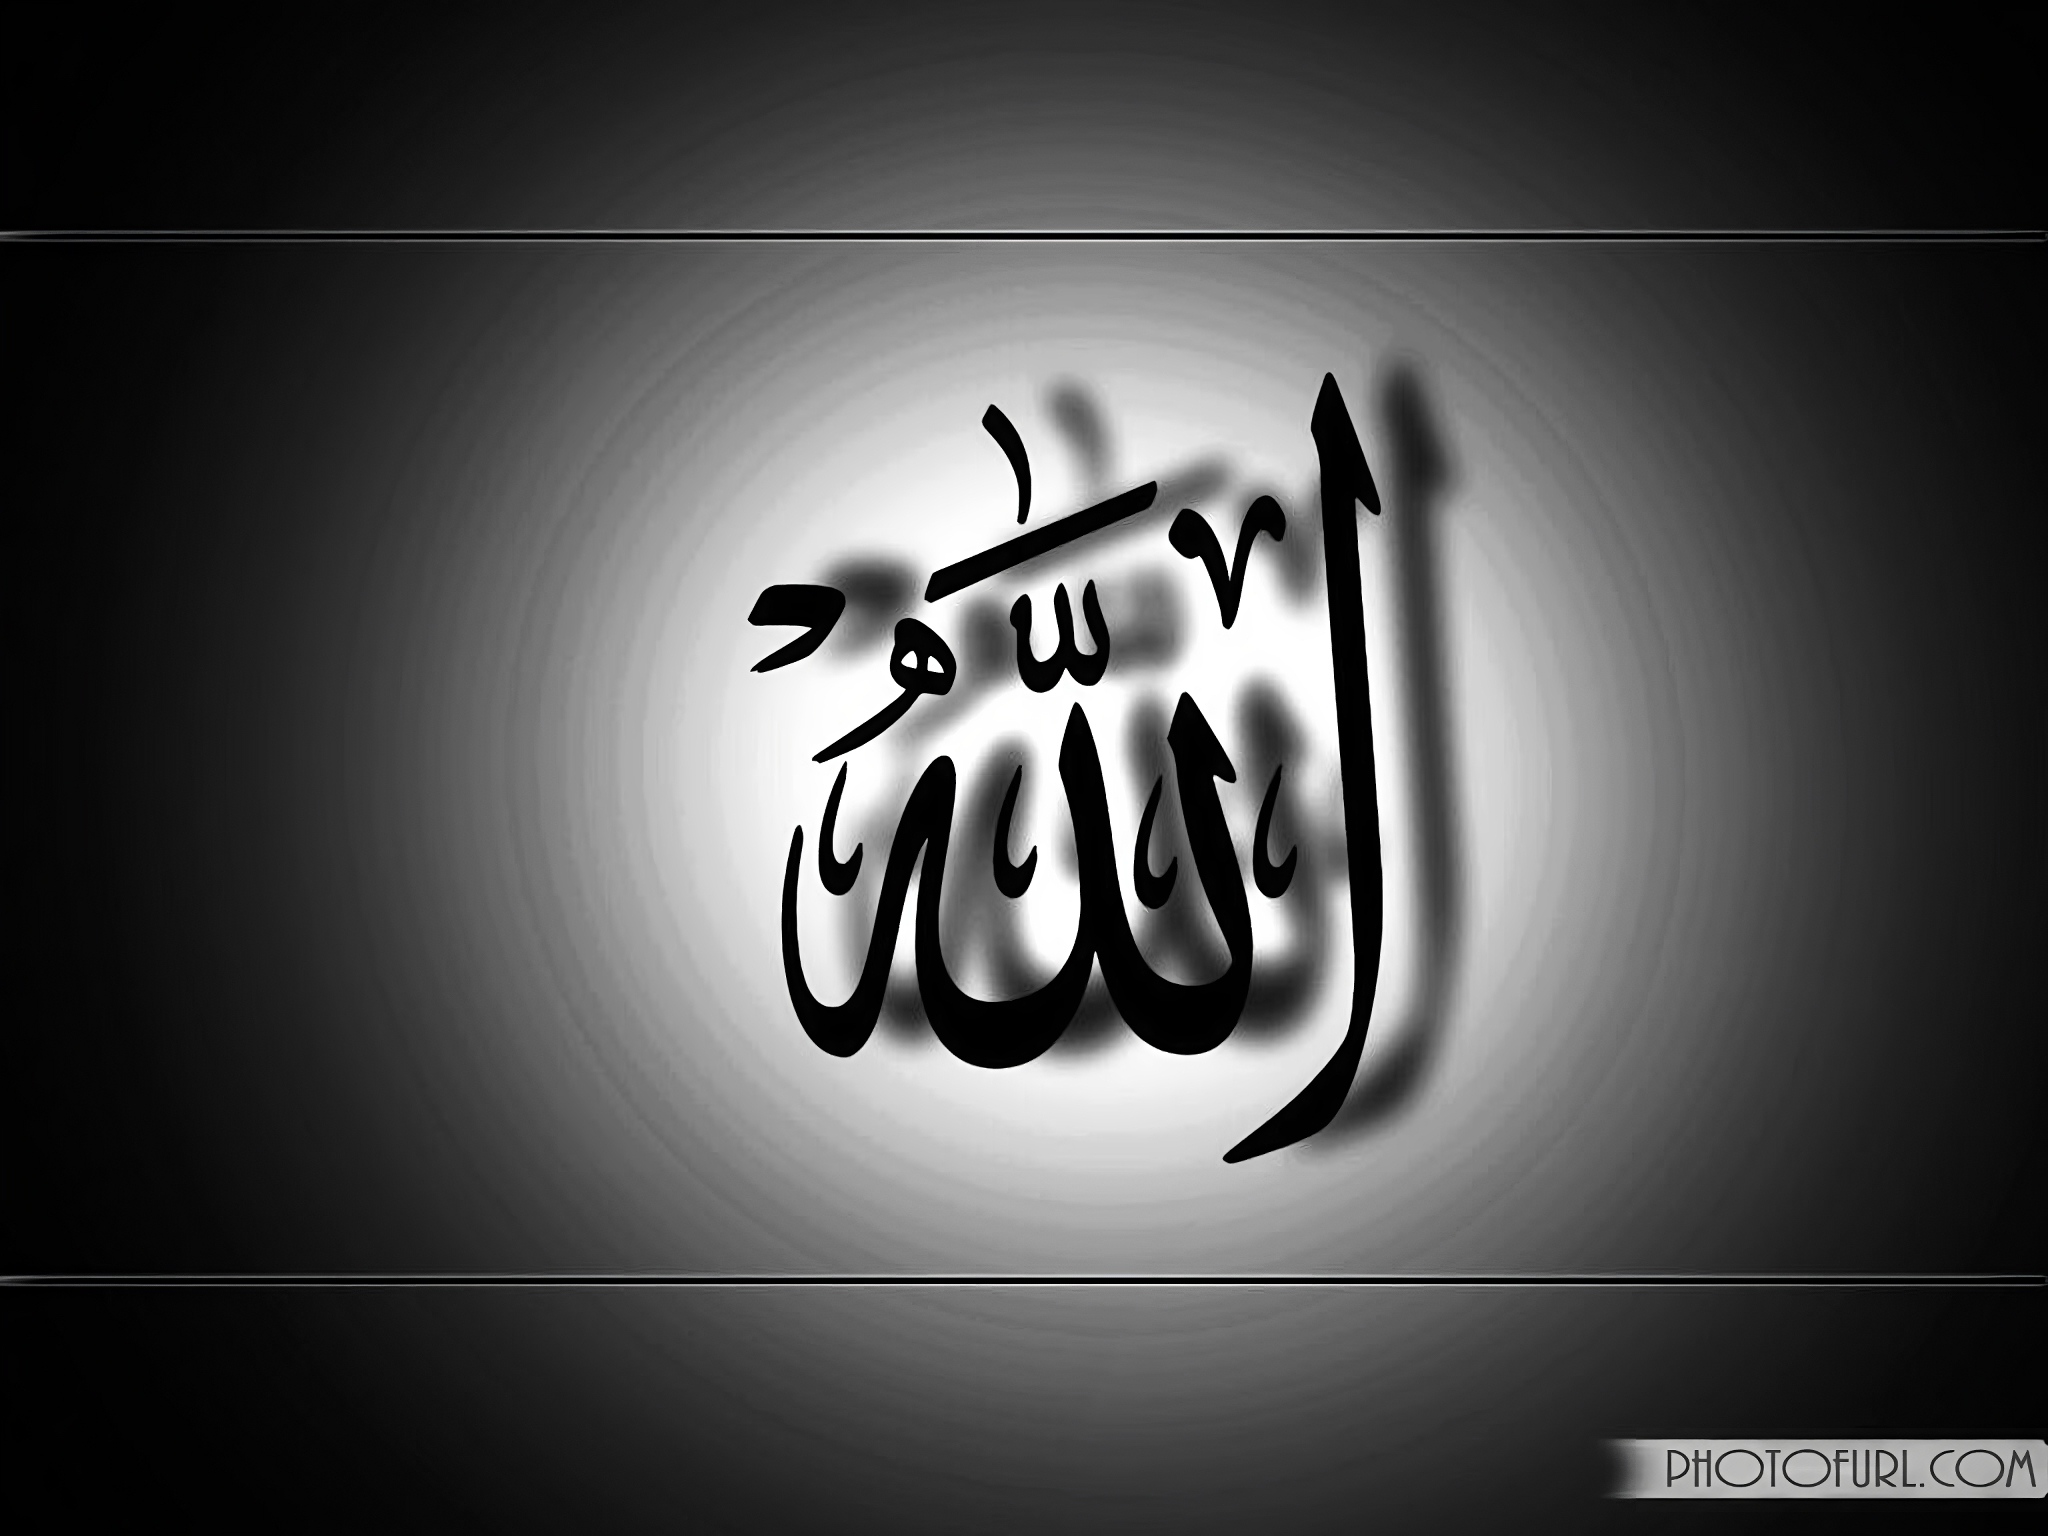 Allah pic hd - black letter